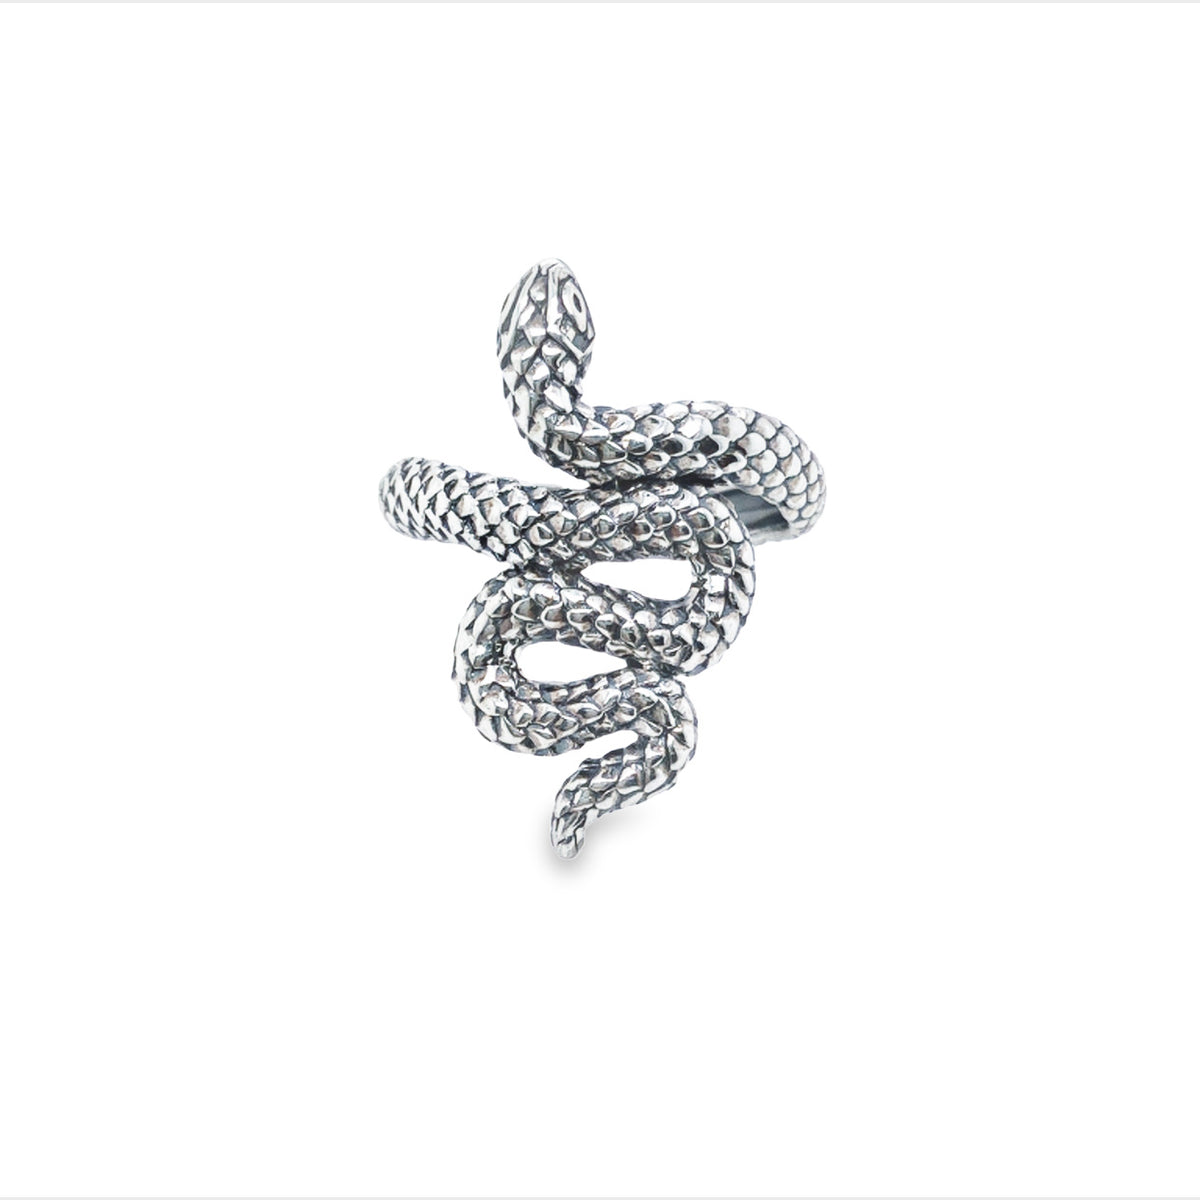 Onatah Sterling Silver Slinky Snake Ring Size 6/L/51